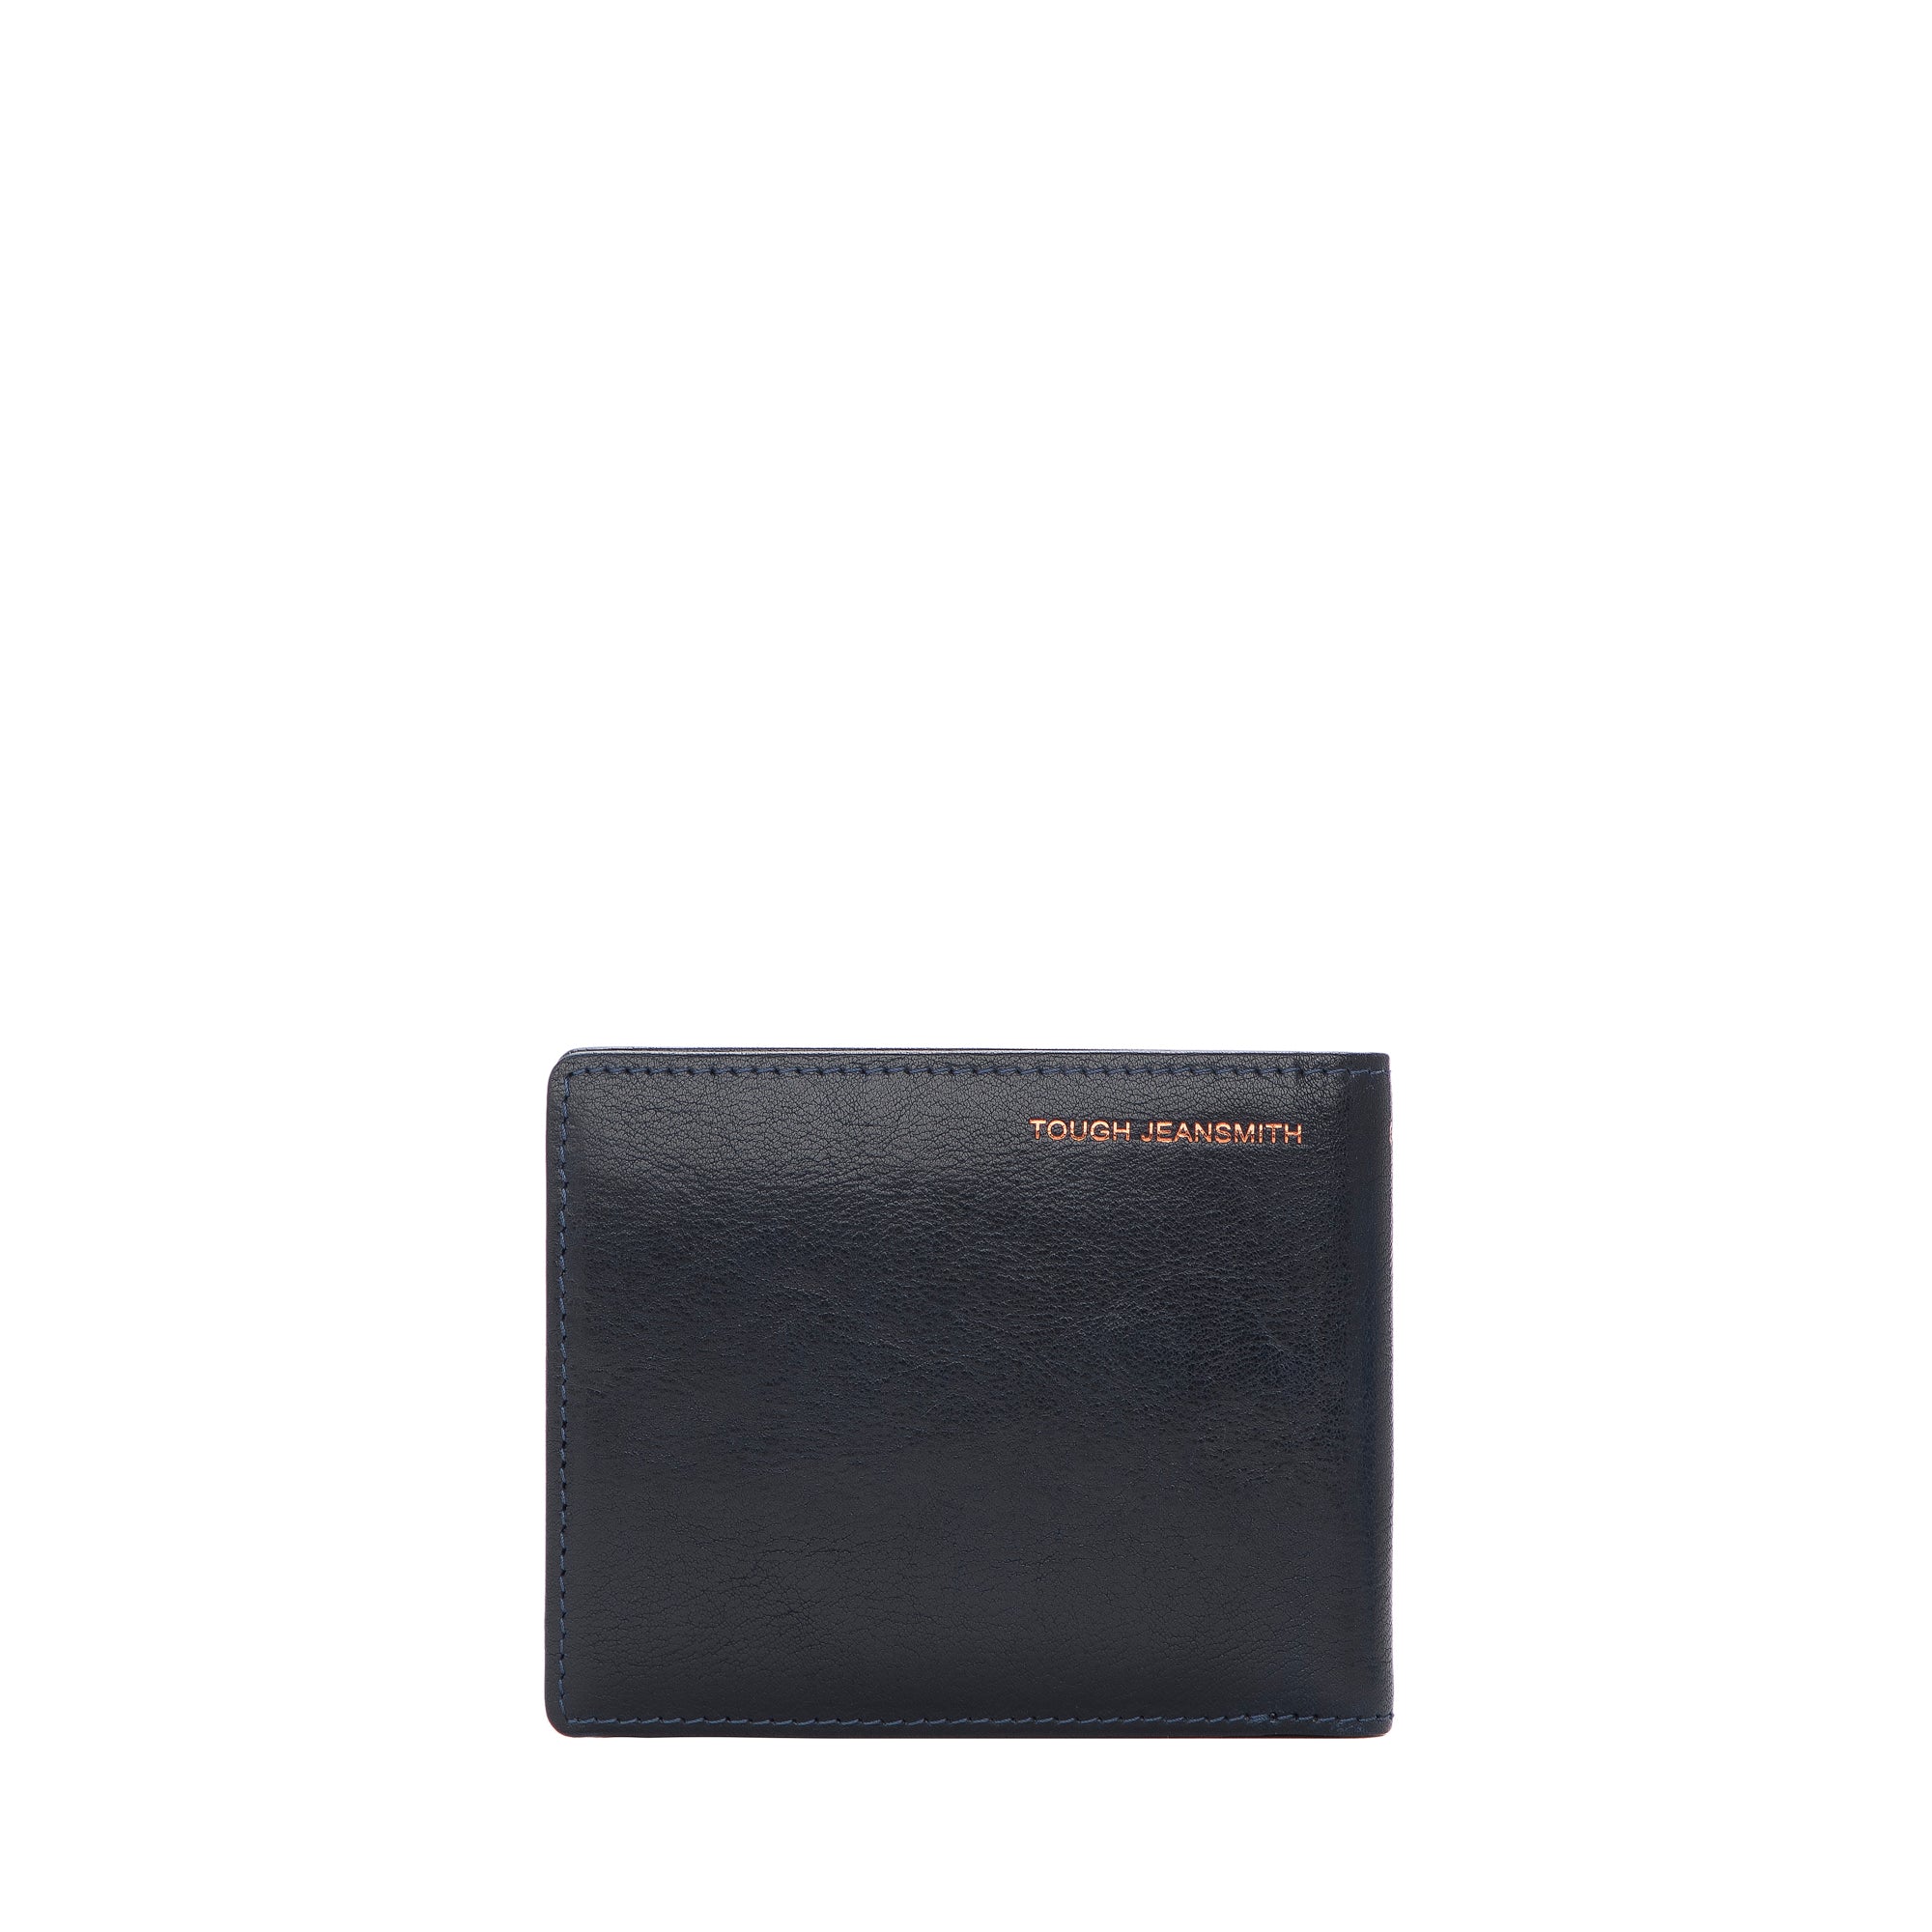 TOUGH JEANSMITH T-21 short wallet #TW121-001